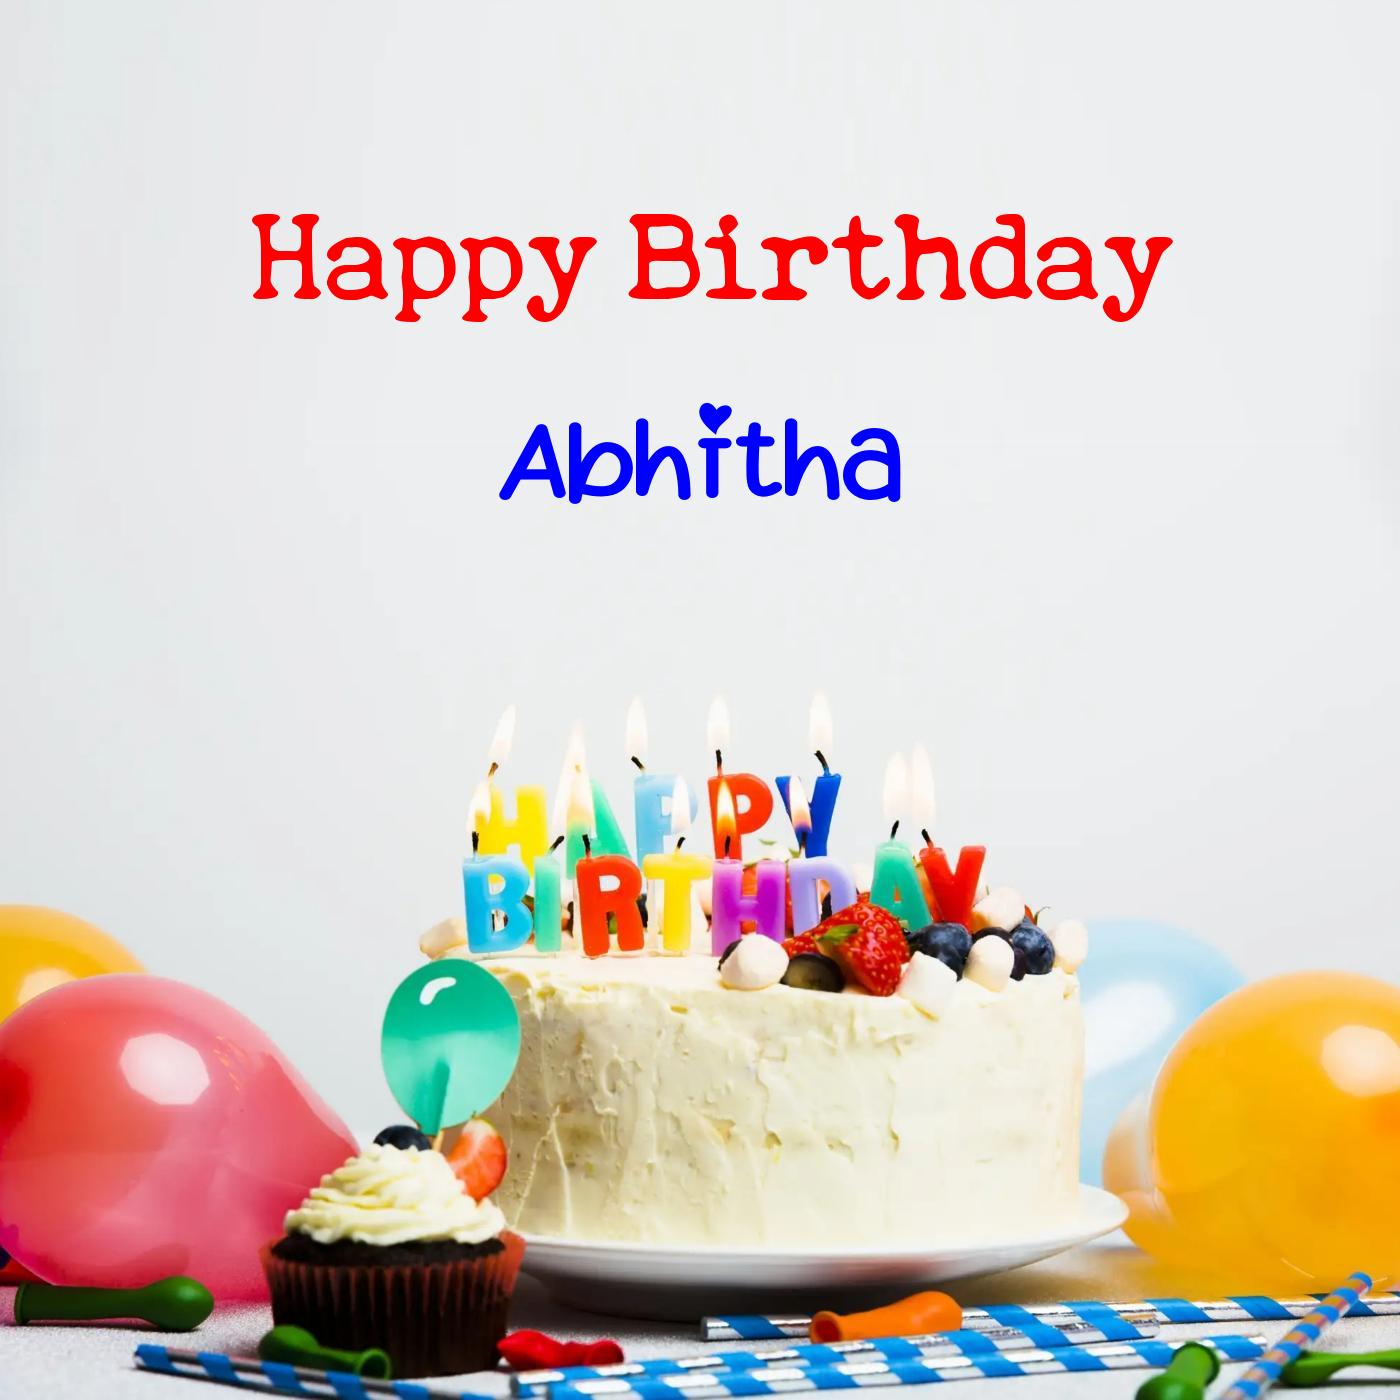 Happy Birthday Abhitha Cake Balloons Card